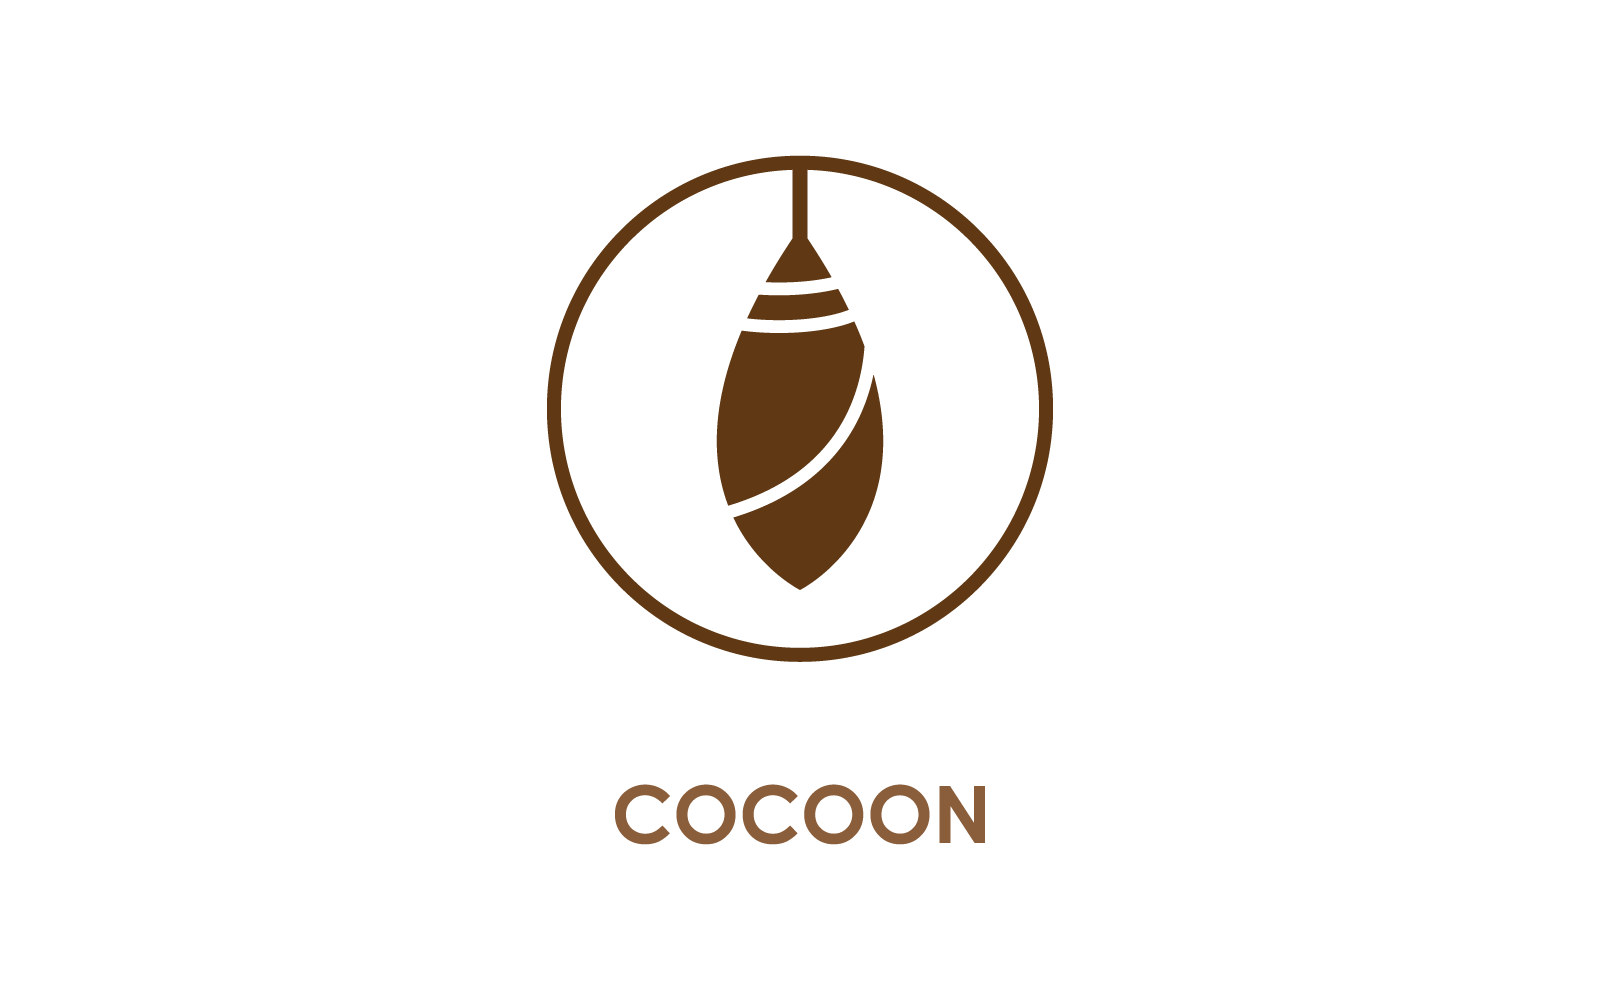 Cocoon illustration logo icon vector design Logo Template